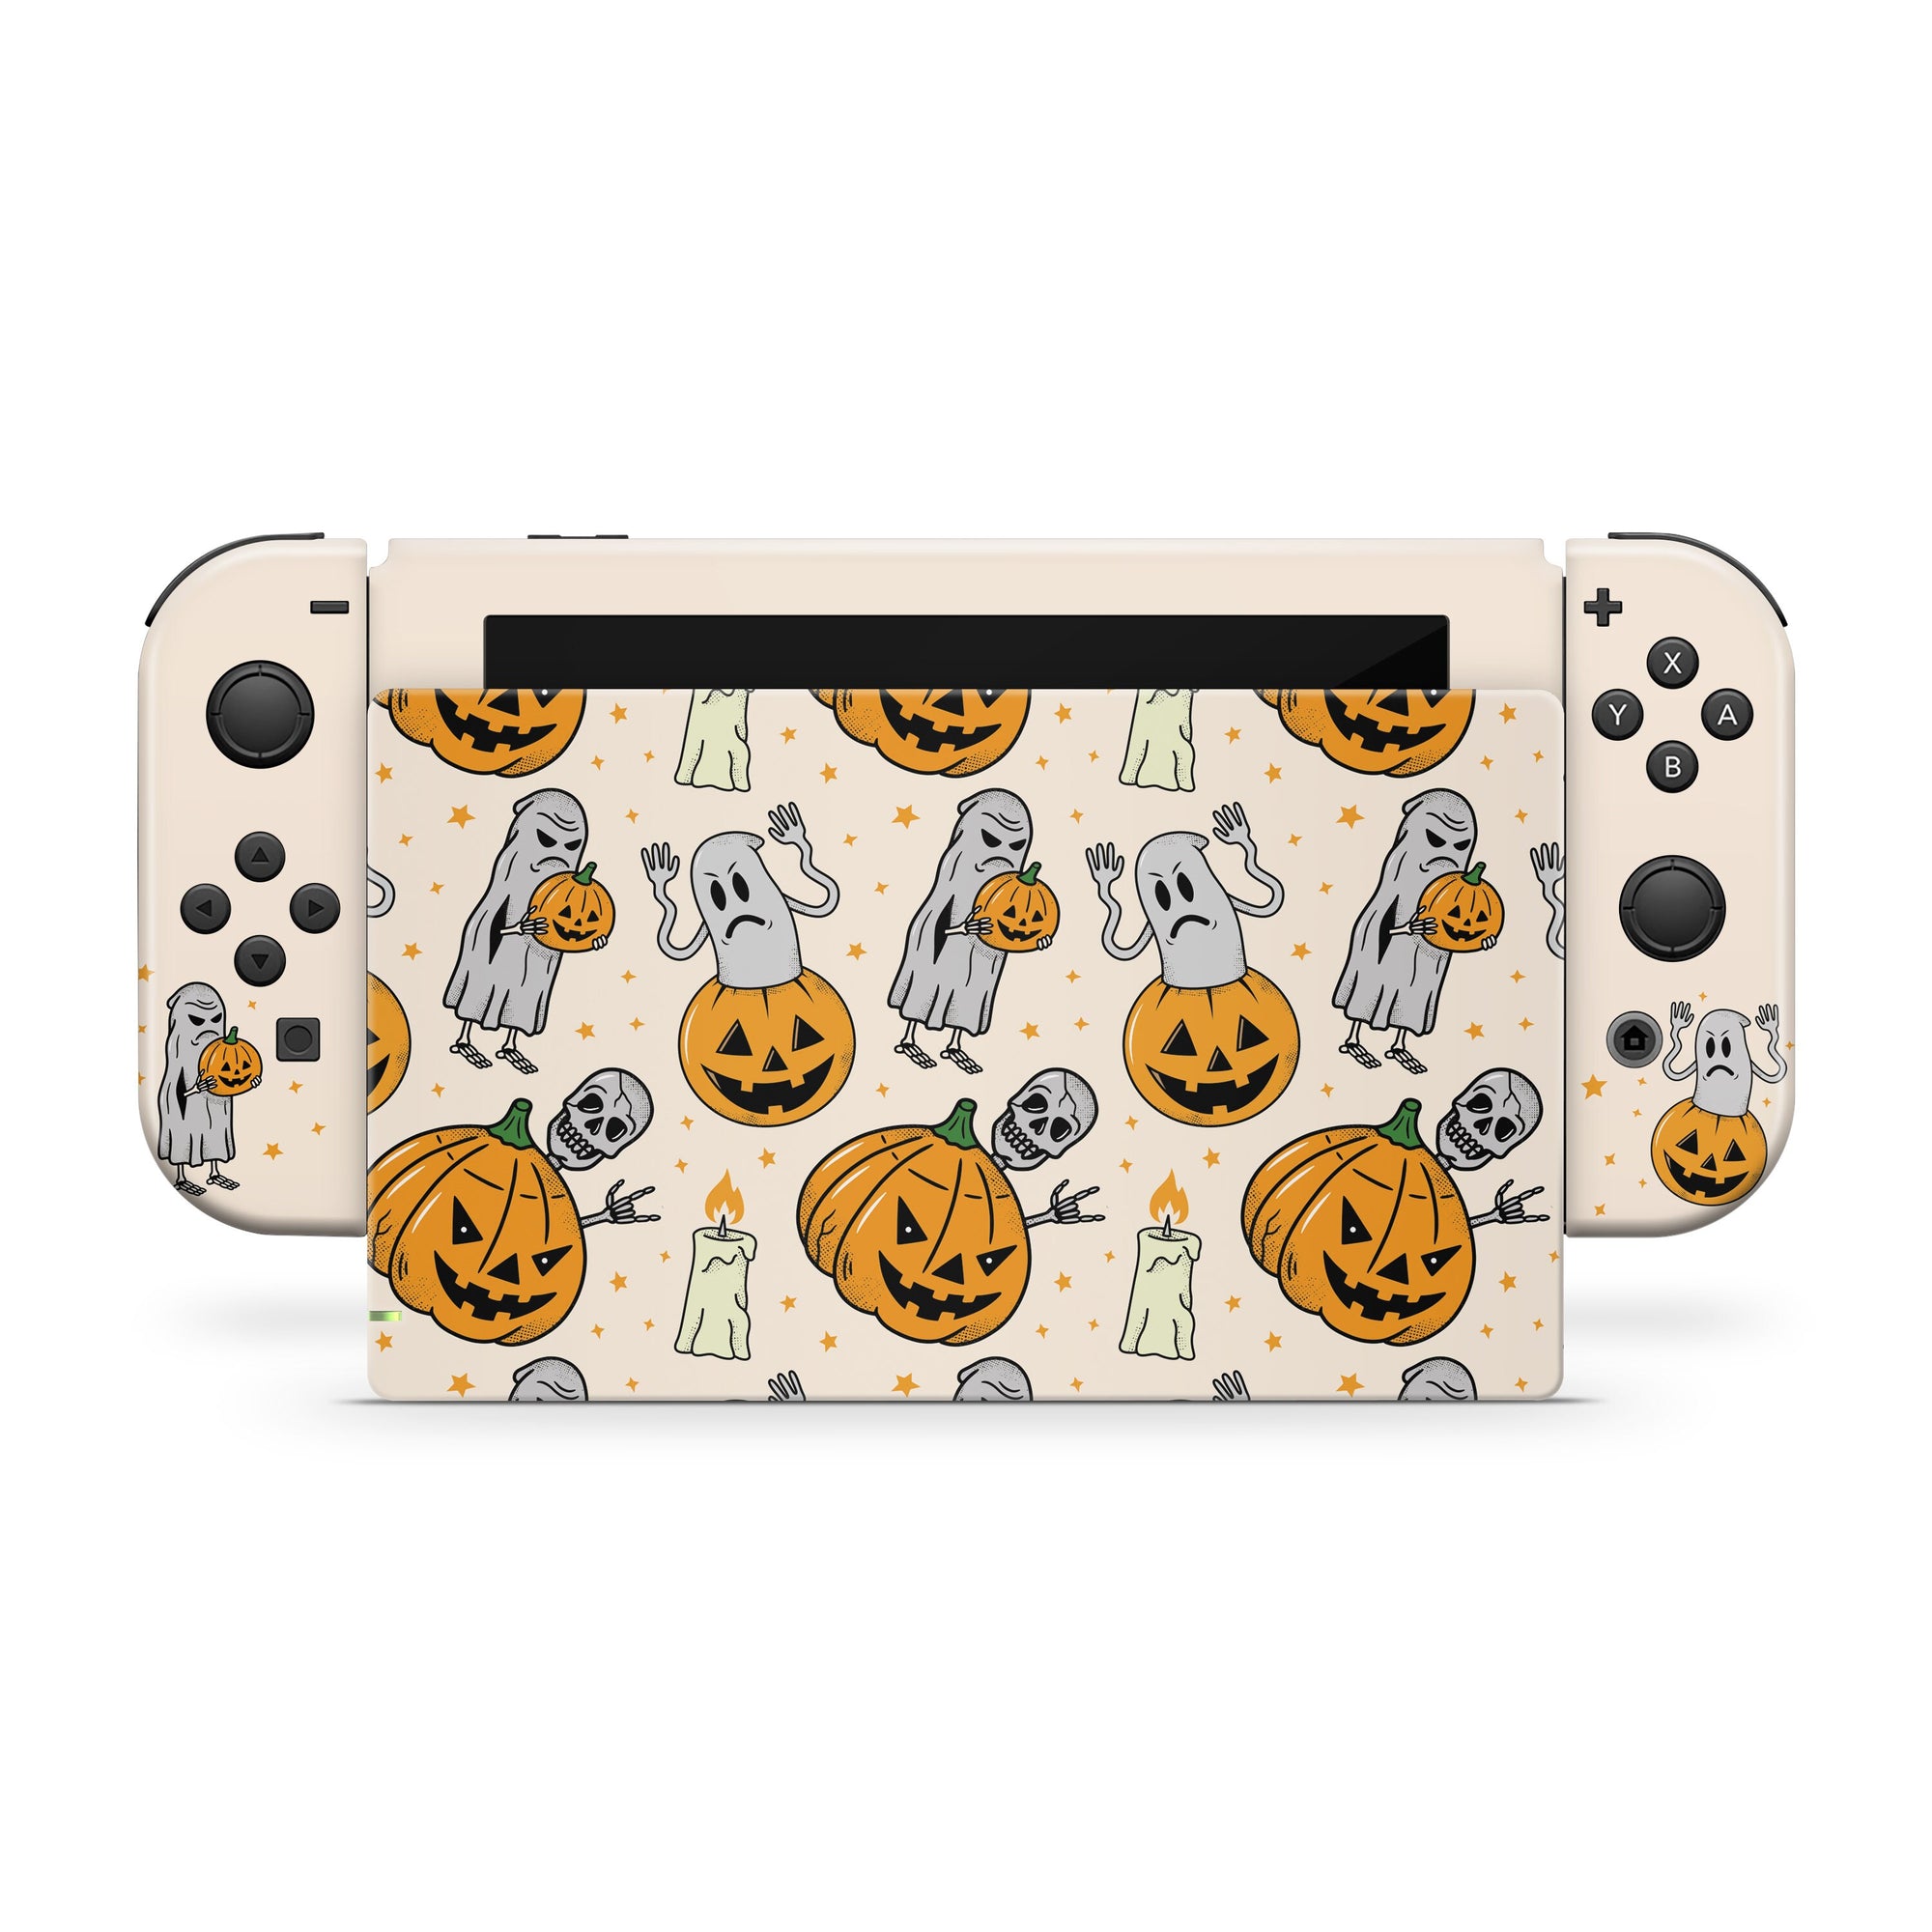 Pumpkin nintendo switches skin Halloween ,spooky Kawaii switch skin Full cover decal vinyl 3m stickers